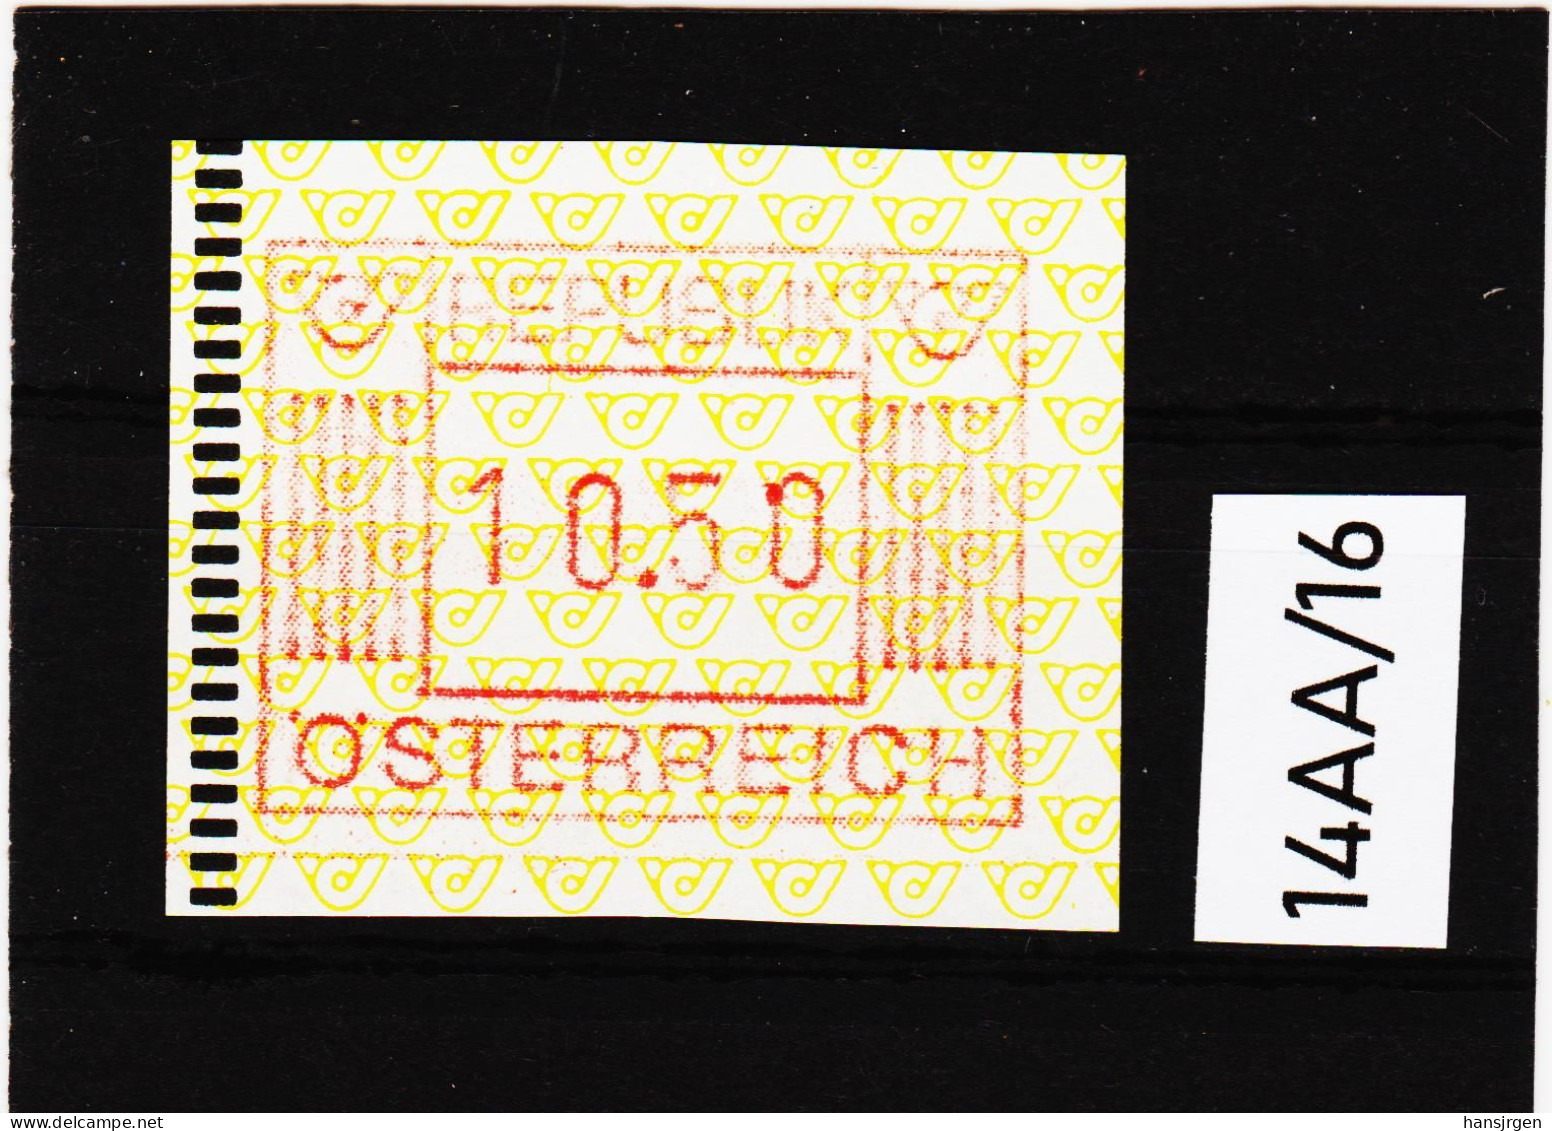 14AA/16  ÖSTERREICH 1983 AUTOMATENMARKEN 1. AUSGABE  10,50 SCHILLING   ** Postfrisch - Timbres De Distributeurs [ATM]